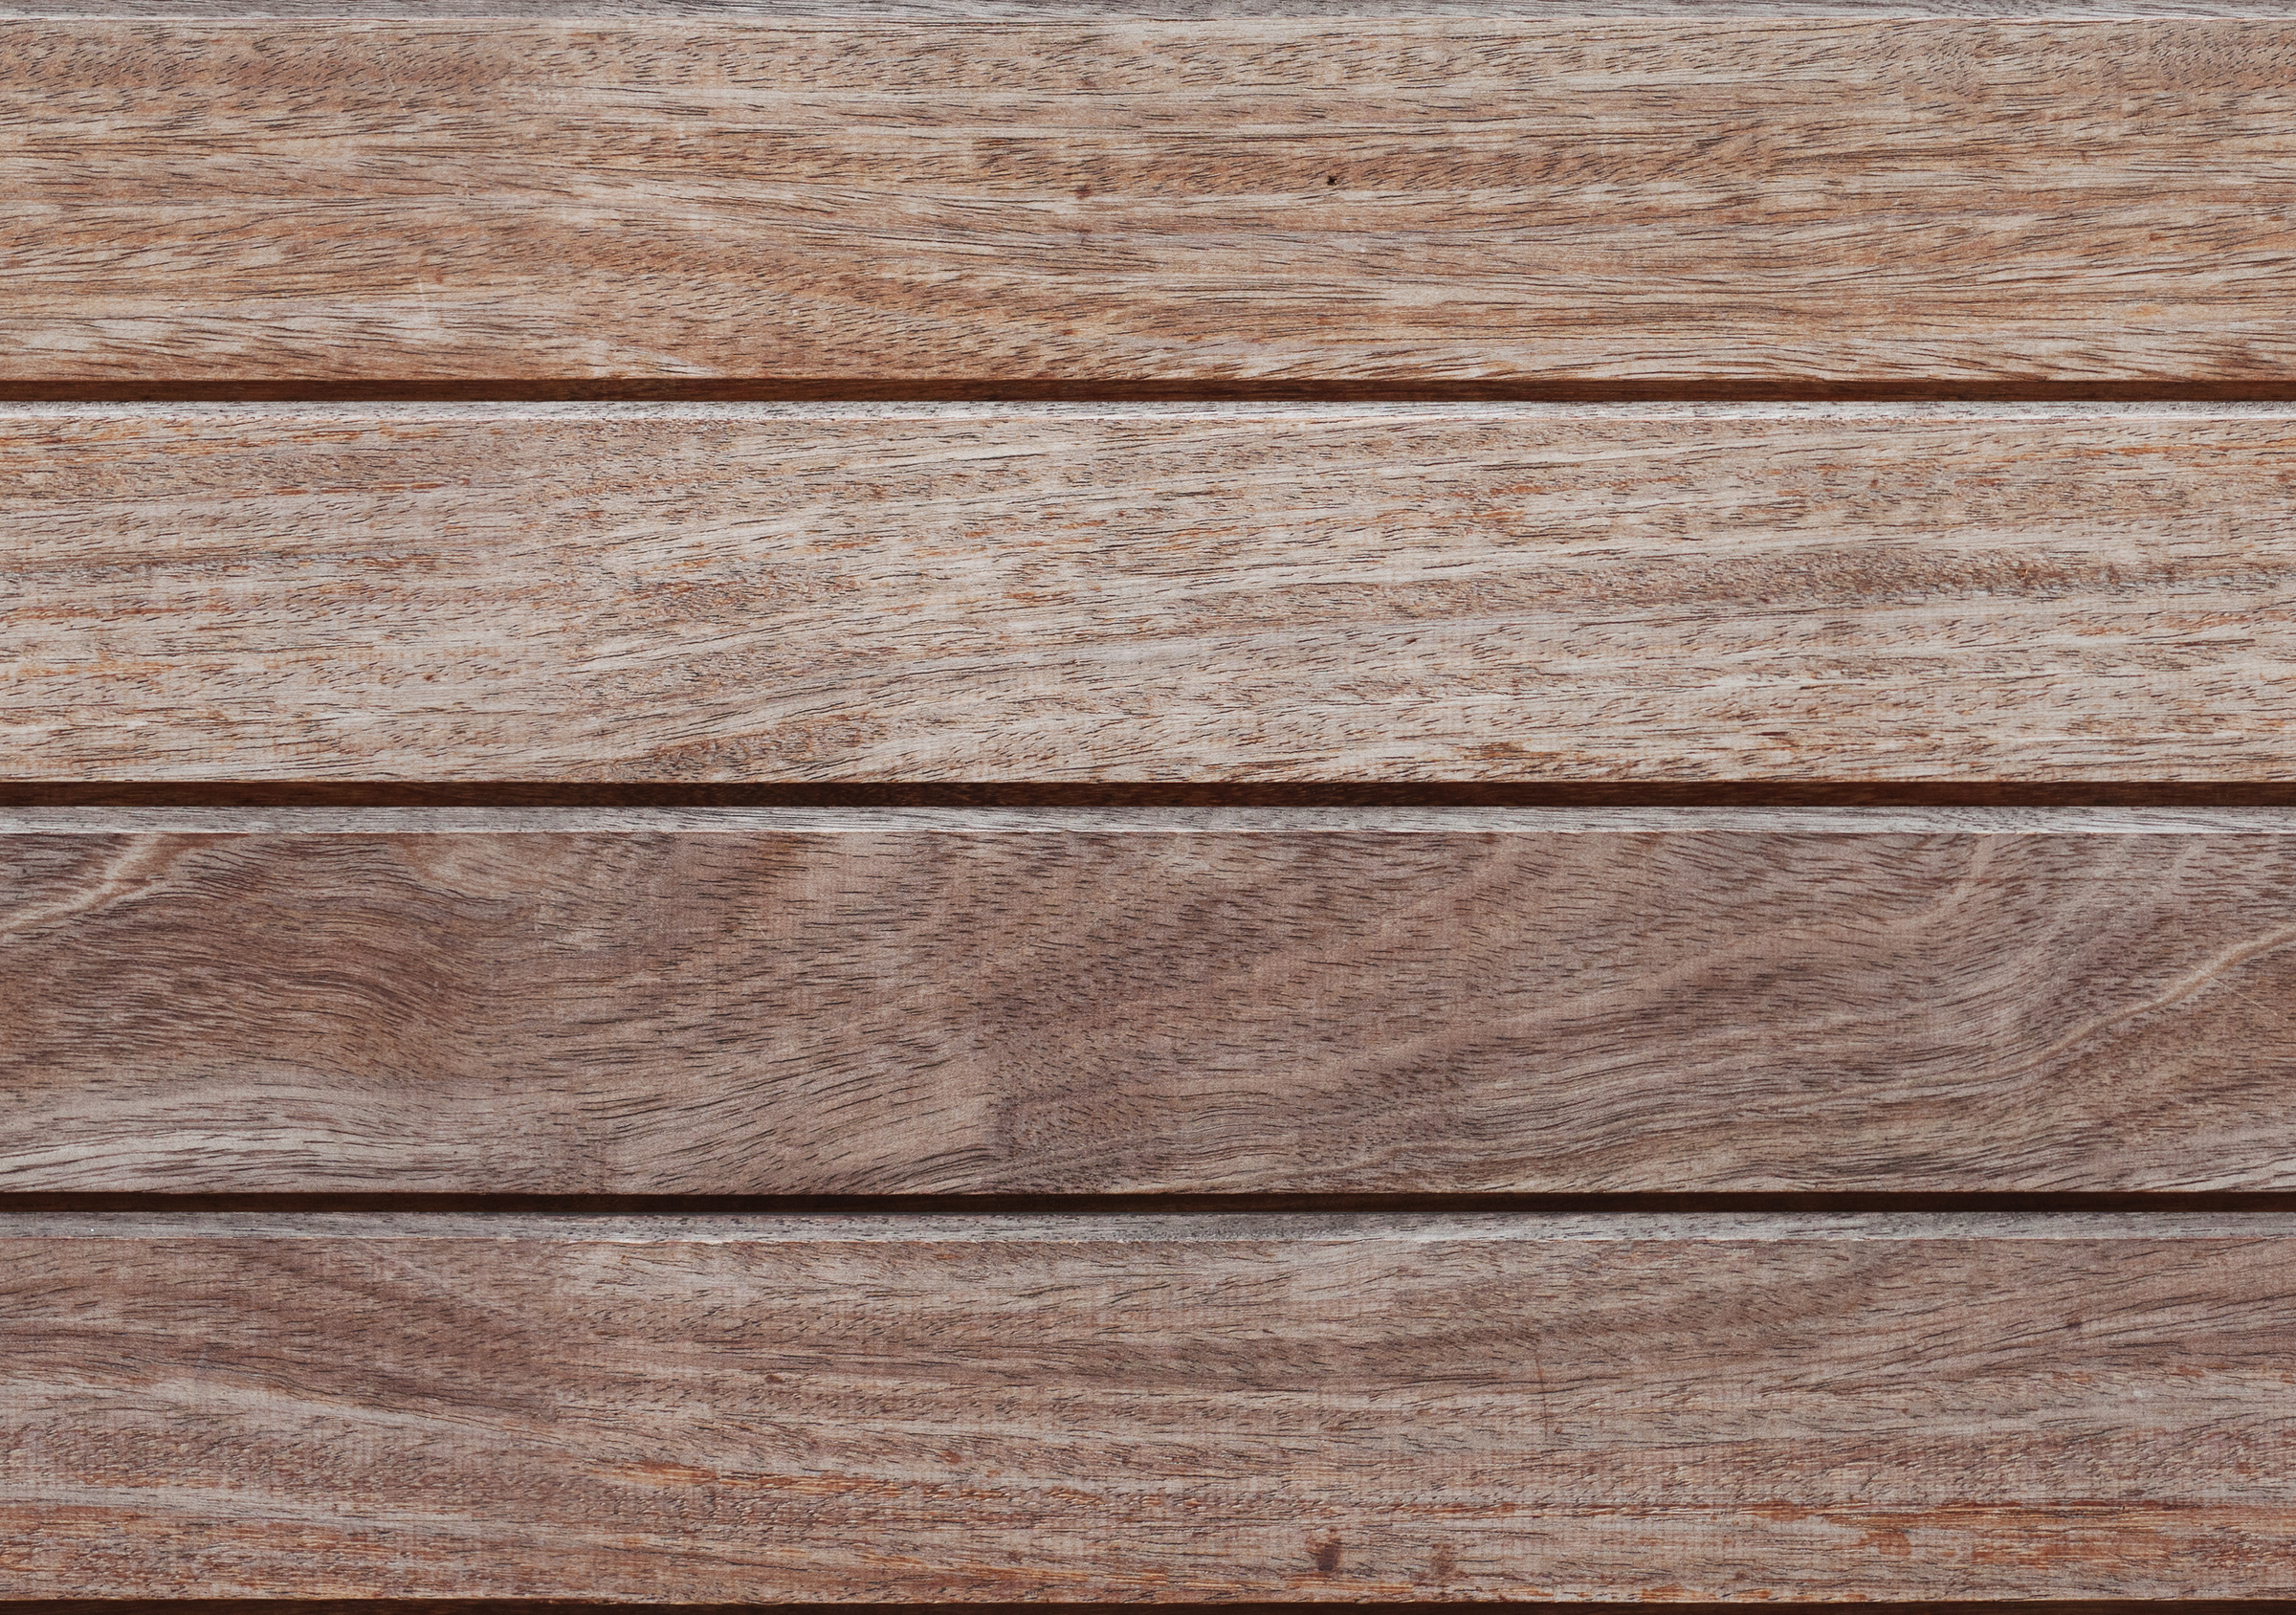 Tileable Wood Planks Texture